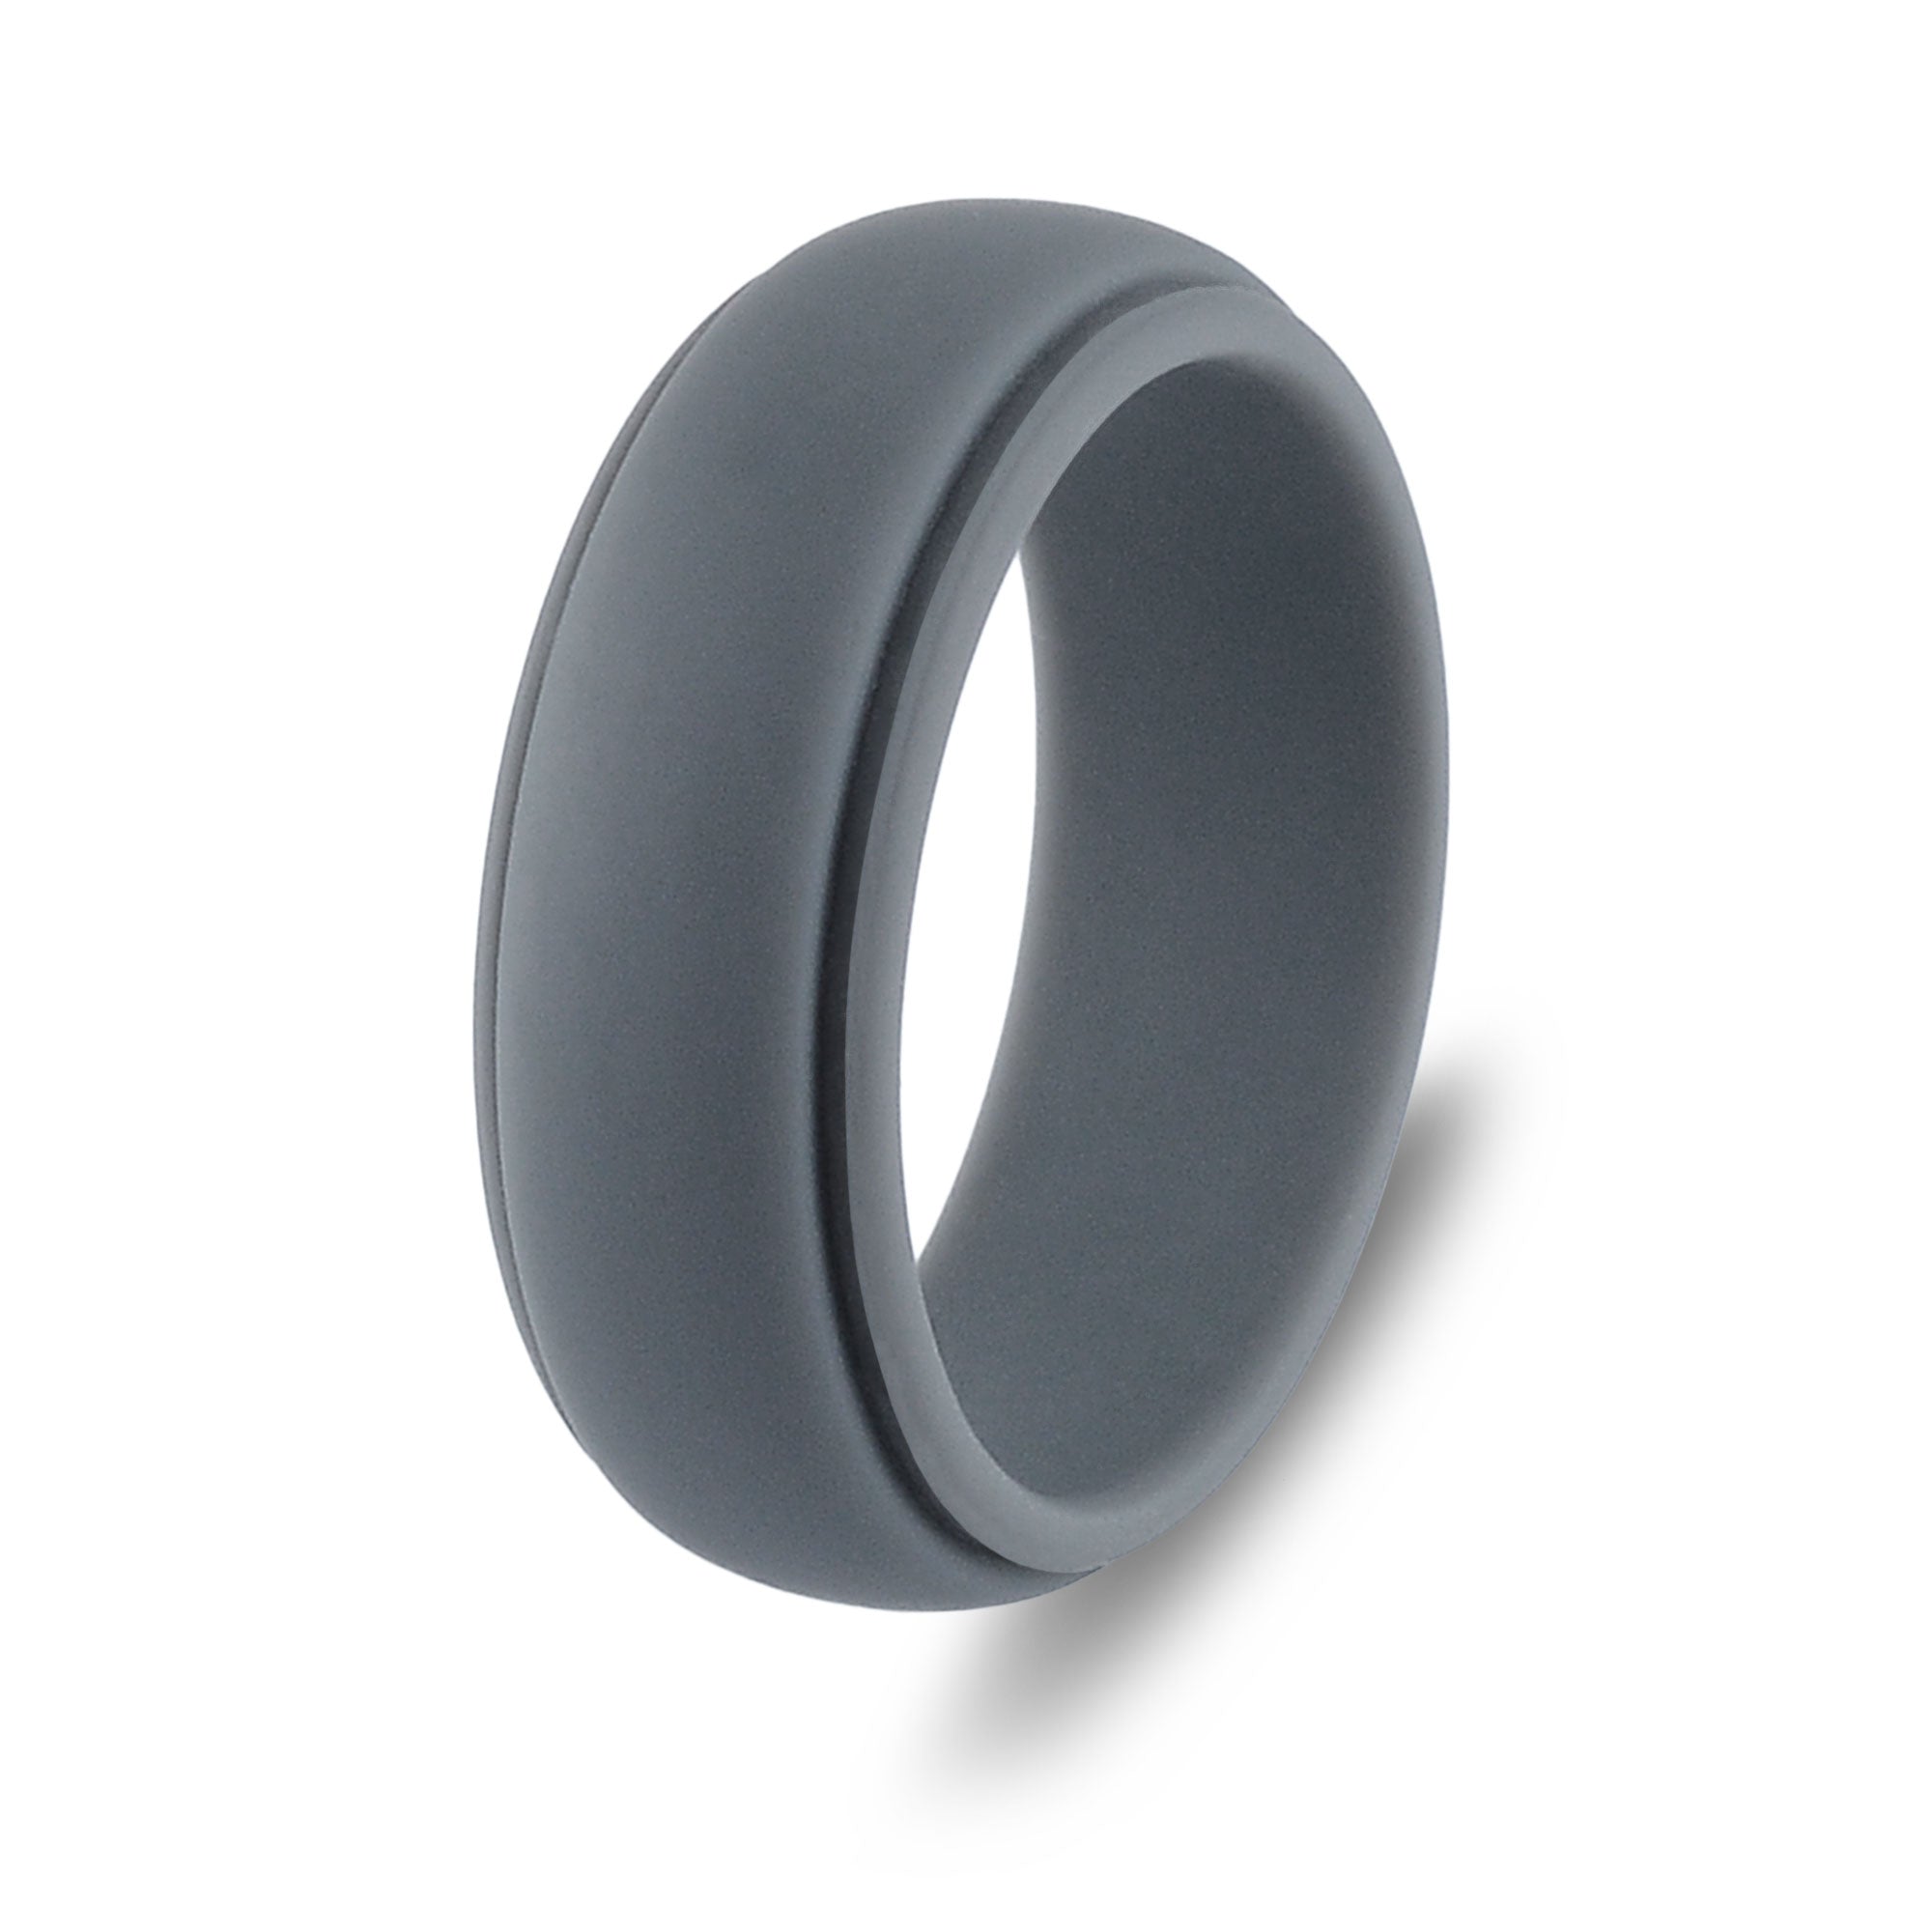 The Graphite - Silicone Ring